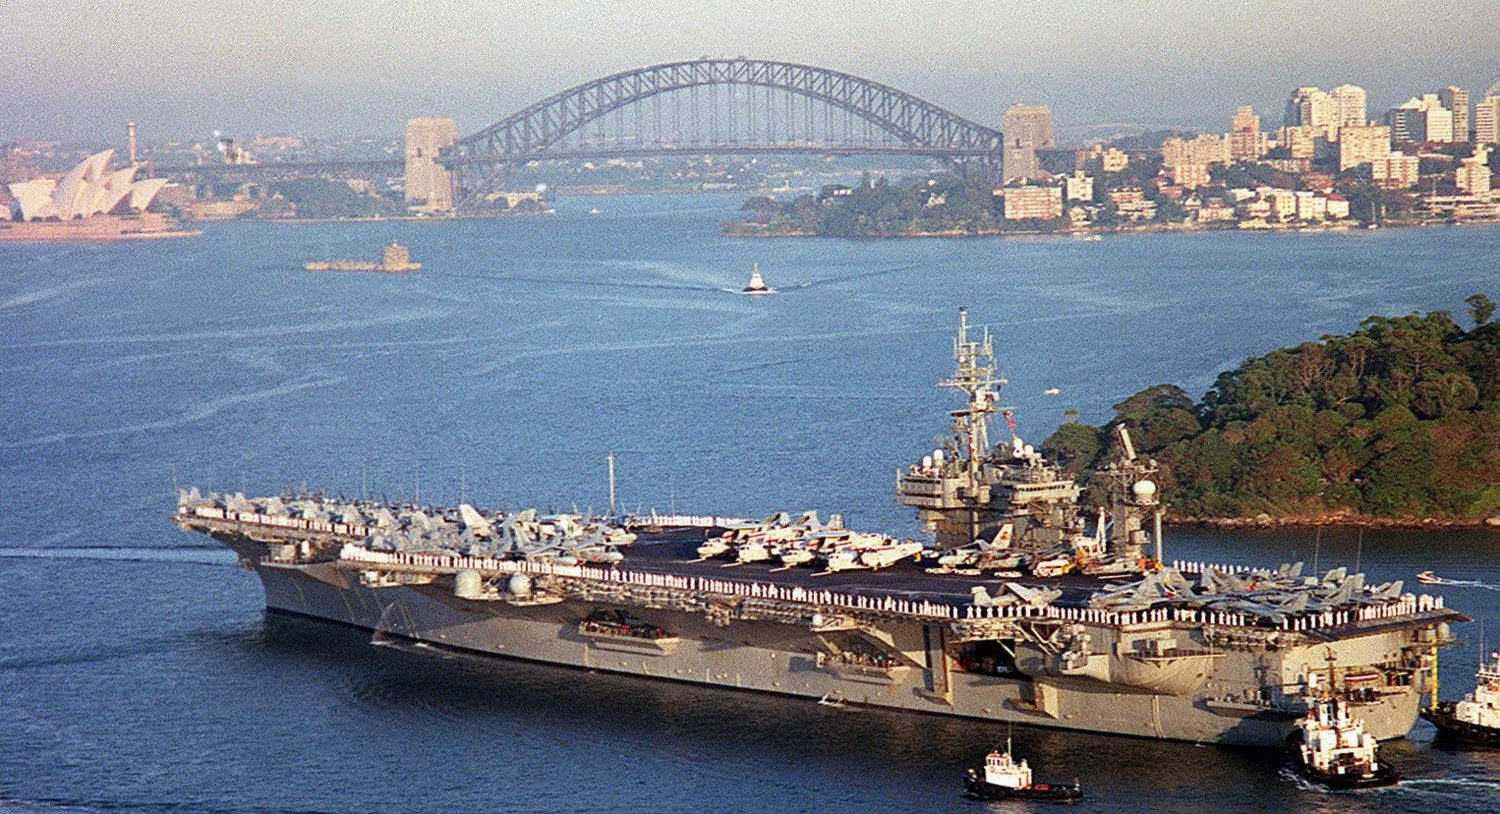 cv-64 uss constellation kitty hawk class aircraft carrier air wing cvw-2 us navy sydney australia 05